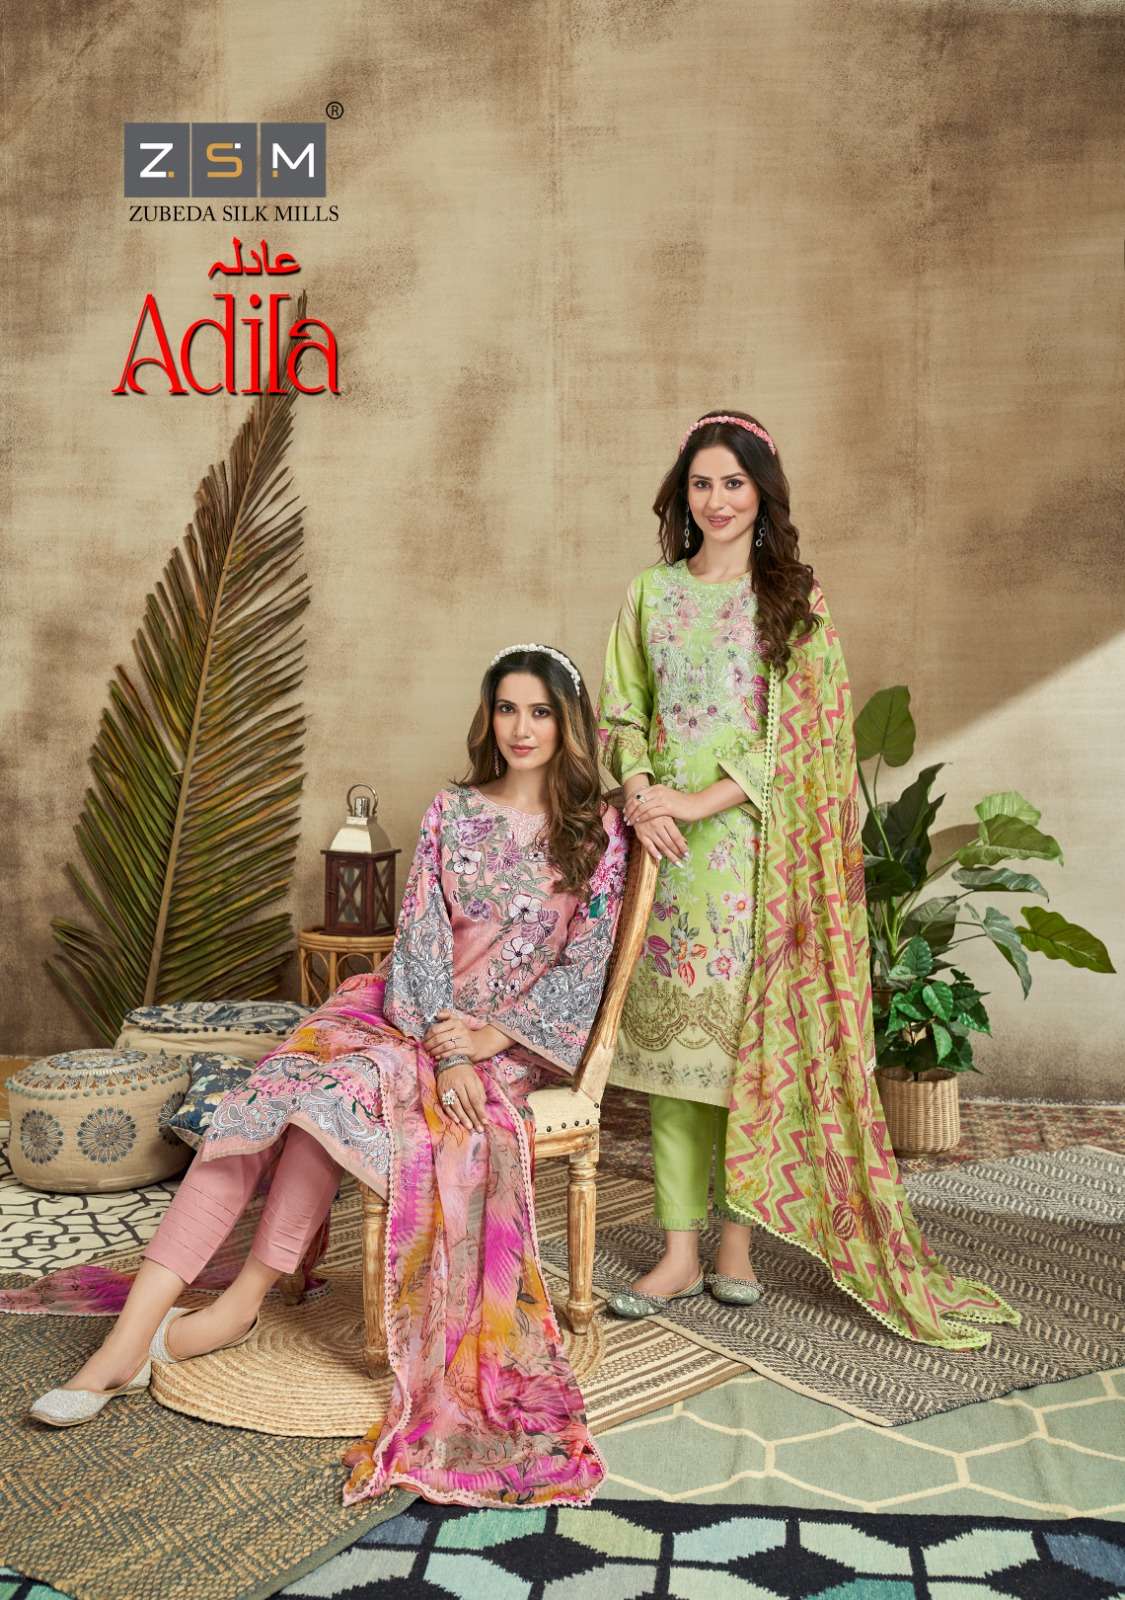 zubeda silk mills present adila pakistani flower printed salwar kameez collection 